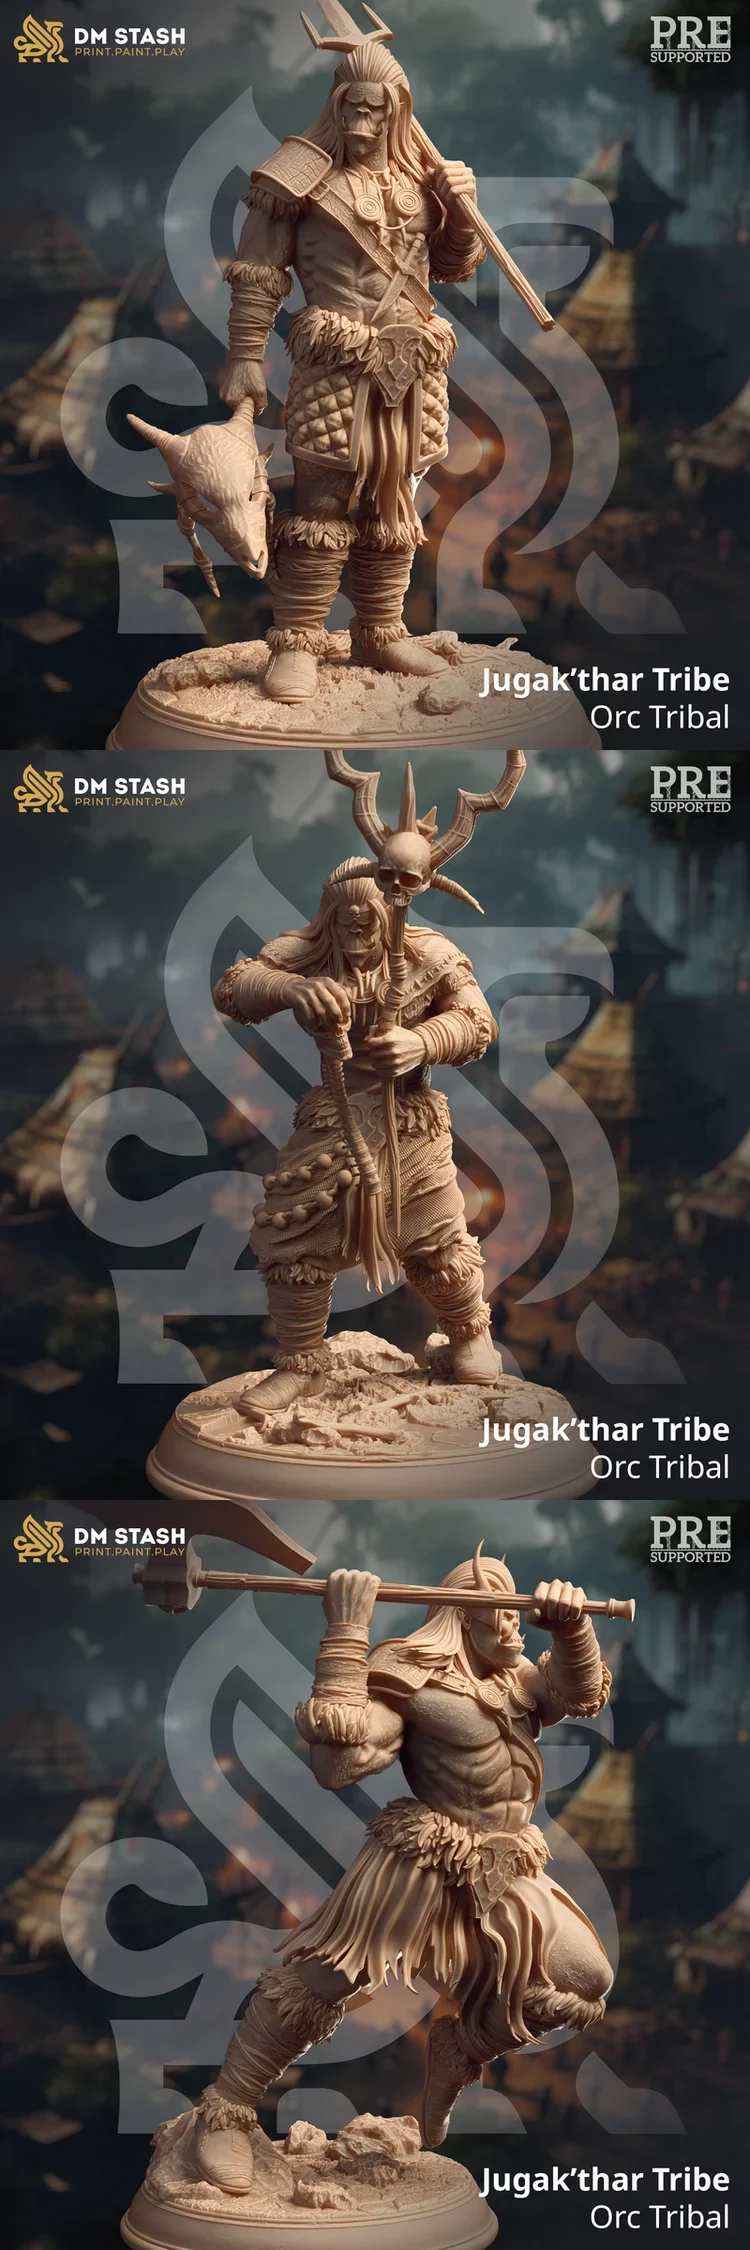 Jugak’thar Tribe - Orc Tribal